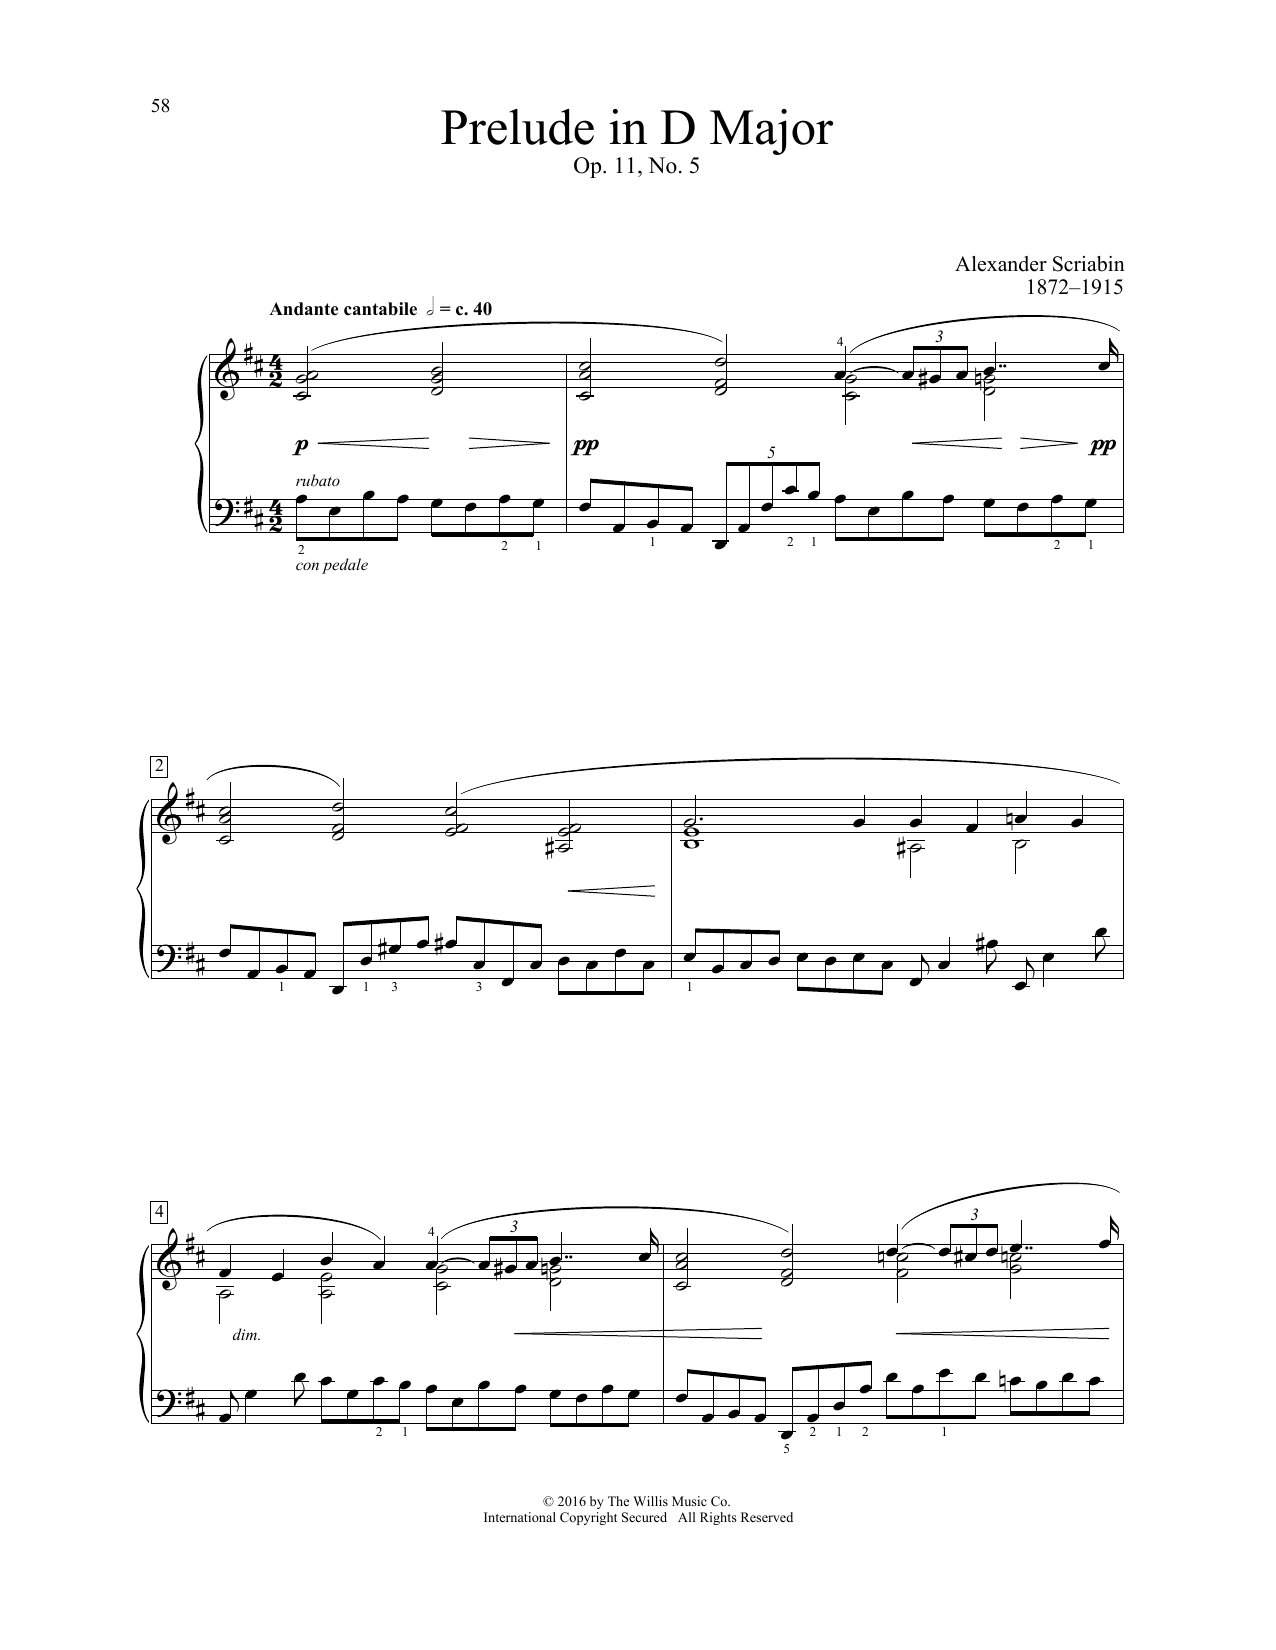 Download Franz Joseph Haydn Sonata In D Major, Hob. XVI:4, 1st Mvmt Sheet Music